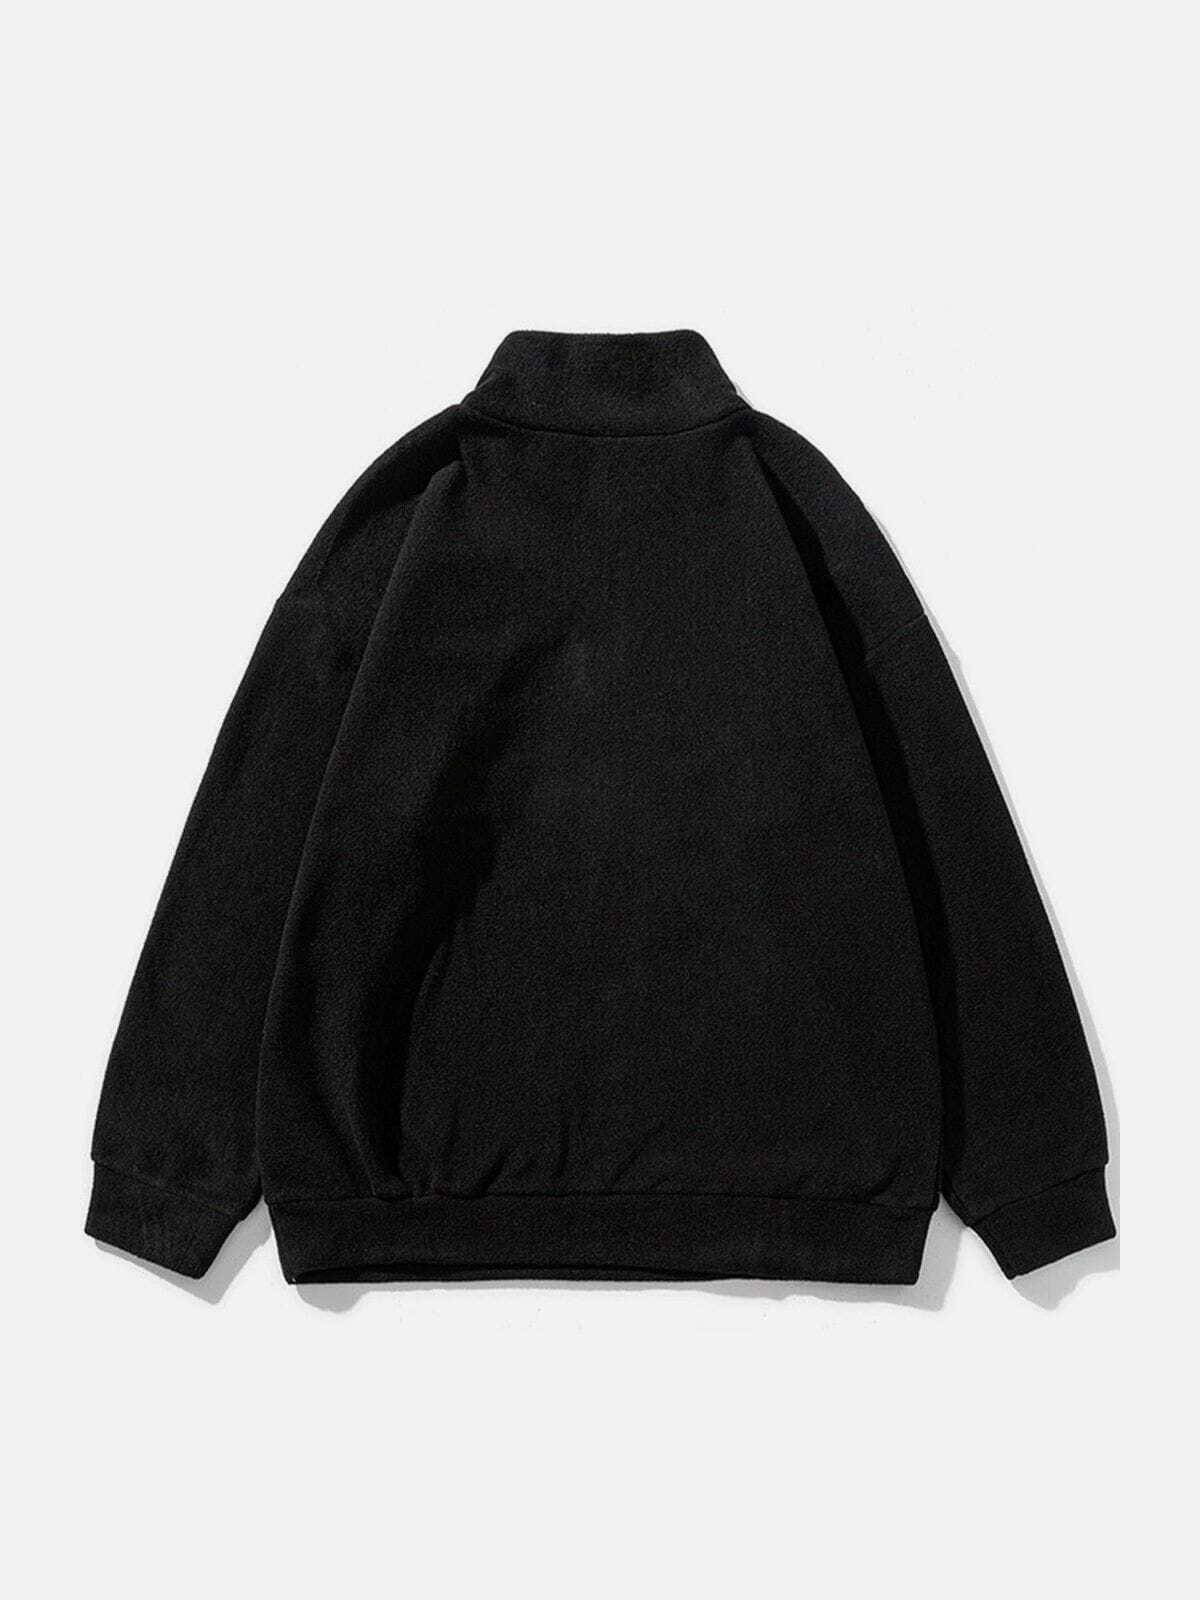 sleek lettered sweatshirt urban fashion essential 1582